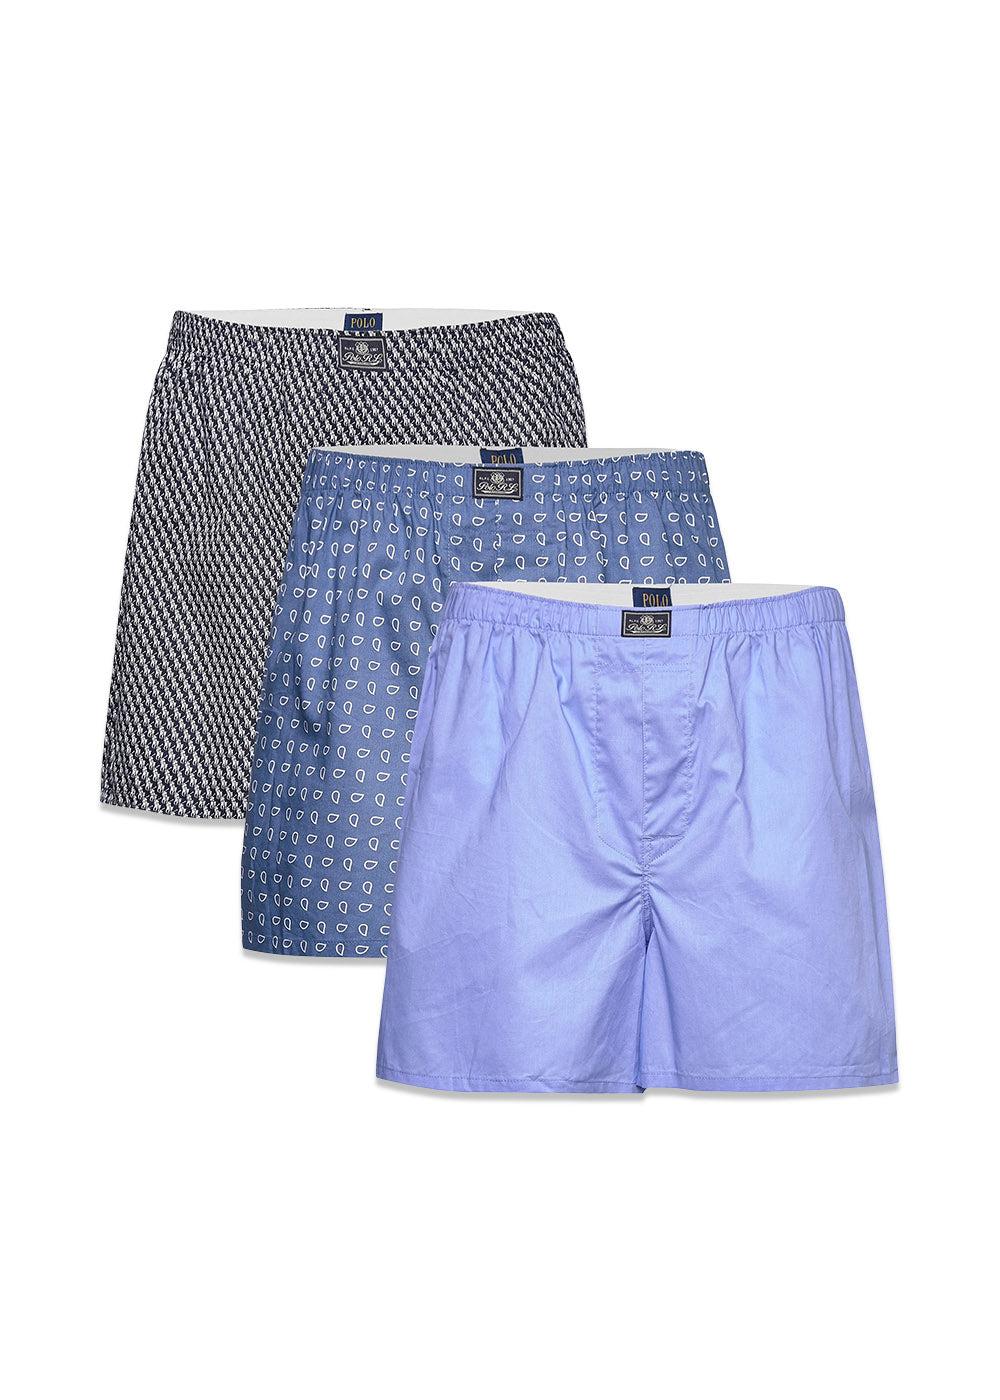 Ralph Laurens 3 Pack Boxer Shorts - Multi. Køb undertøj her.